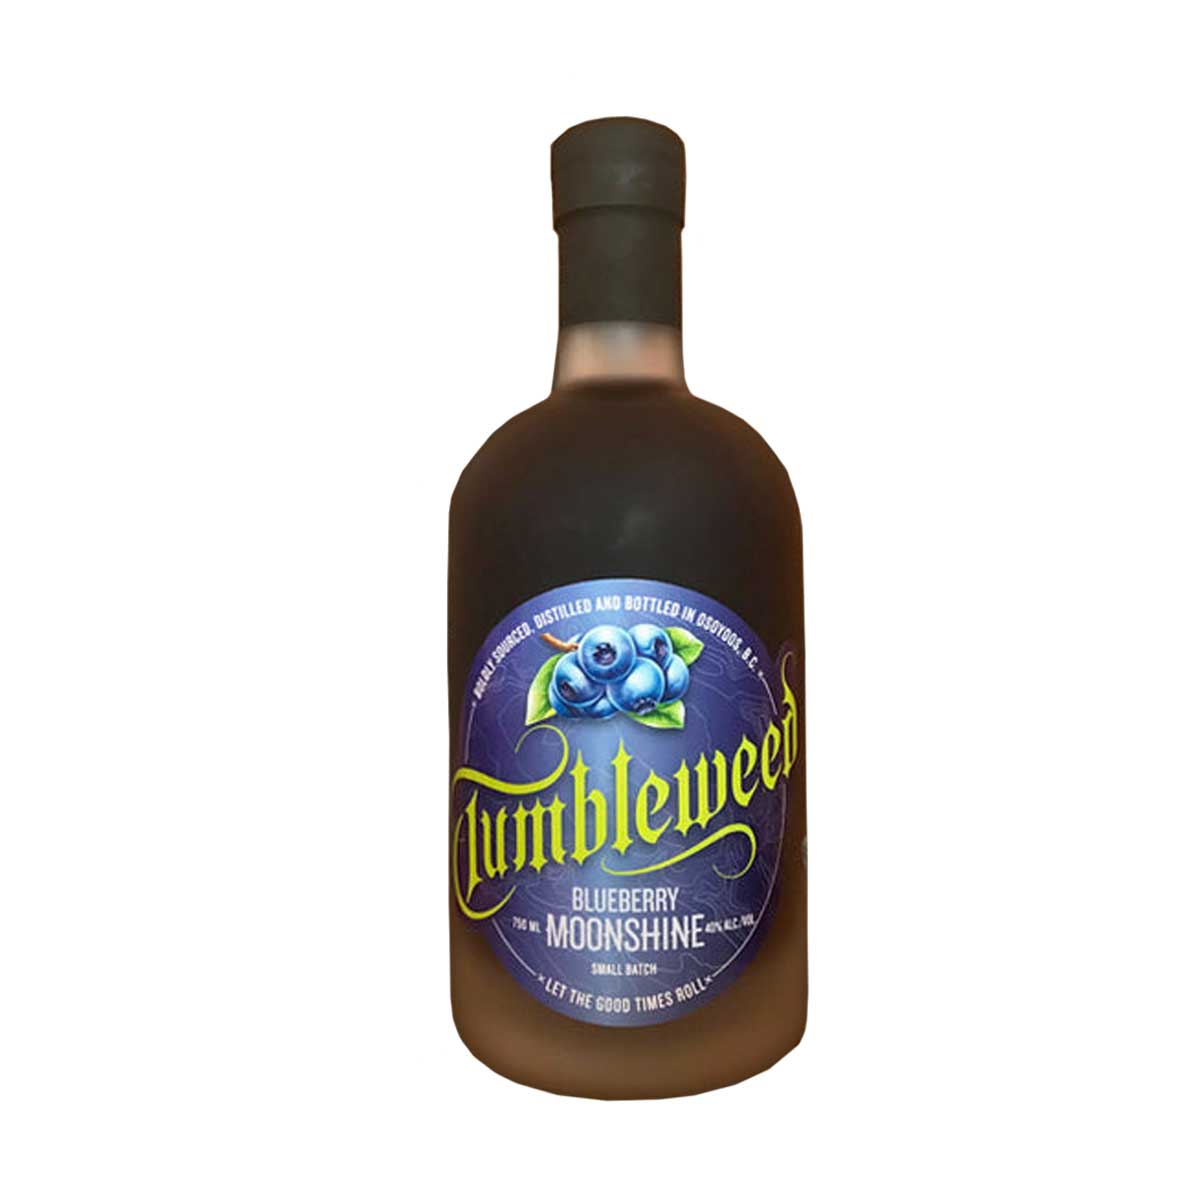 TAG Liquor Stores BC-TUMBLEWEED BLUEBERRY MOONSHINE 750ML